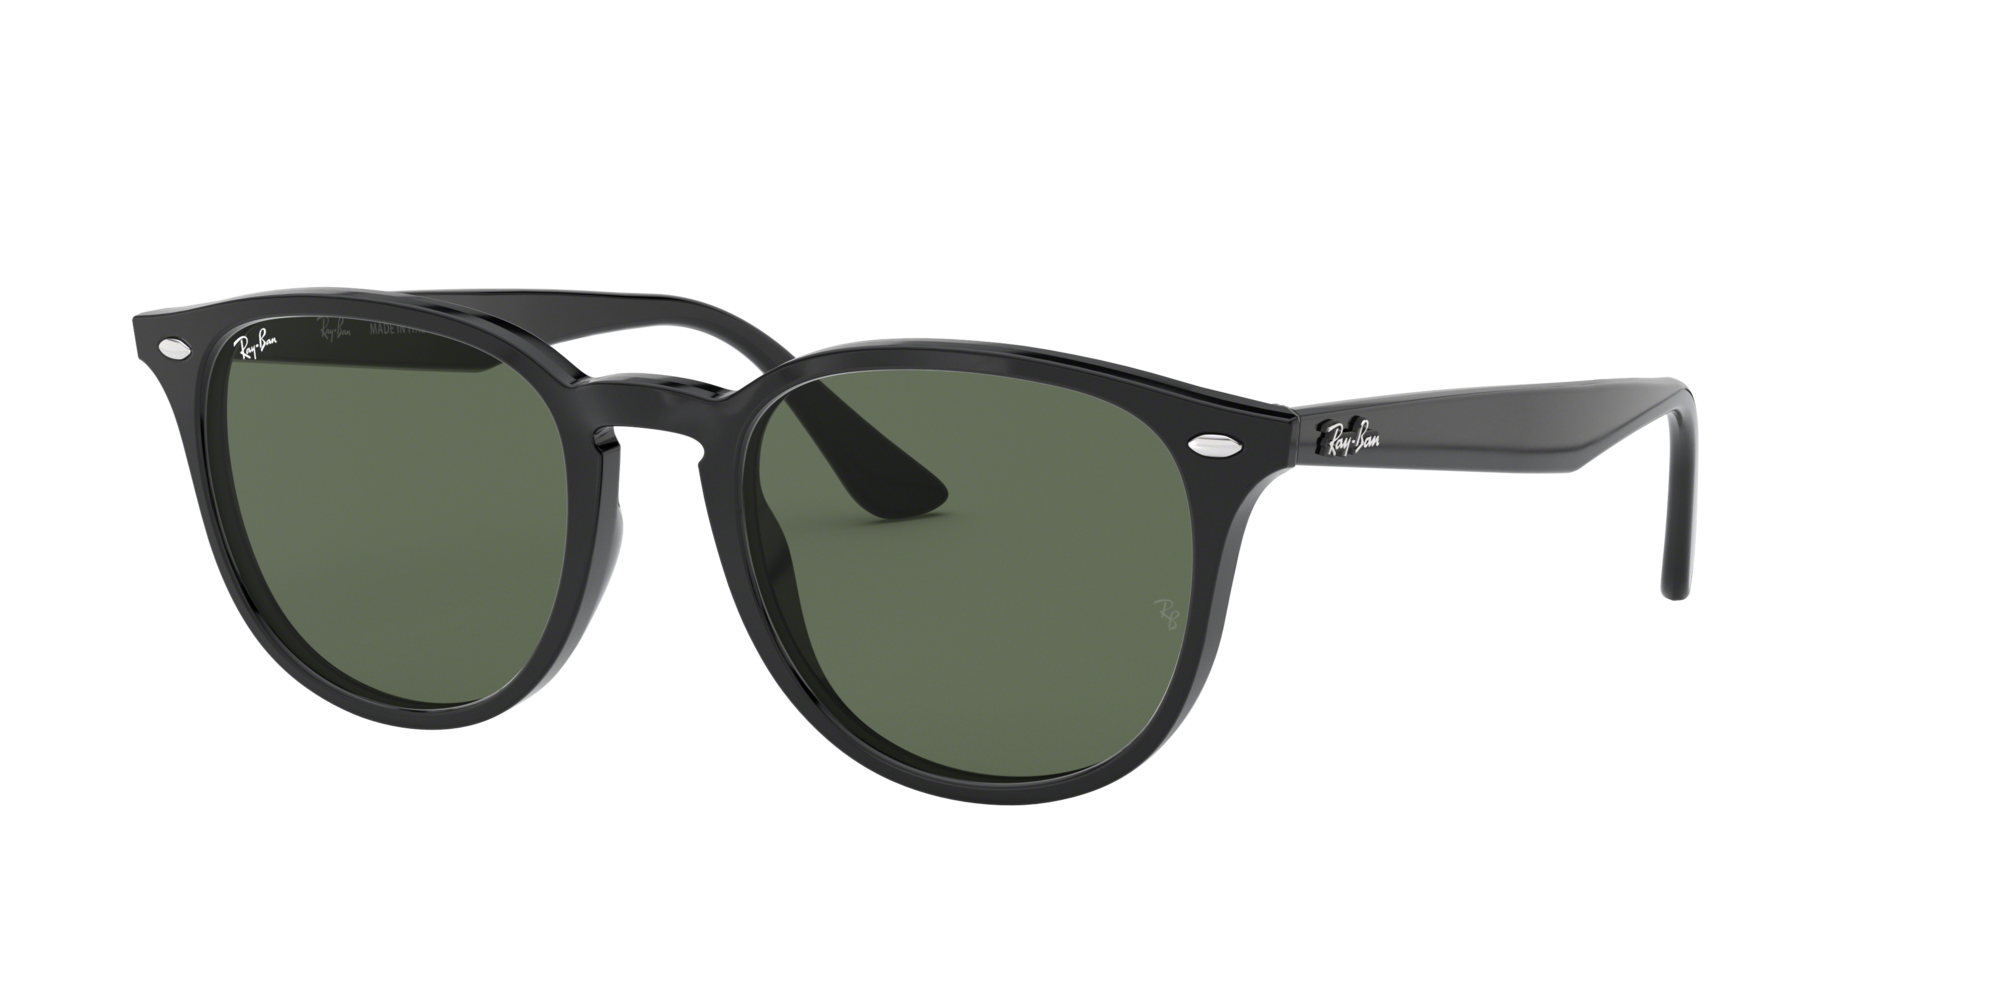 target optical ray ban sunglasses